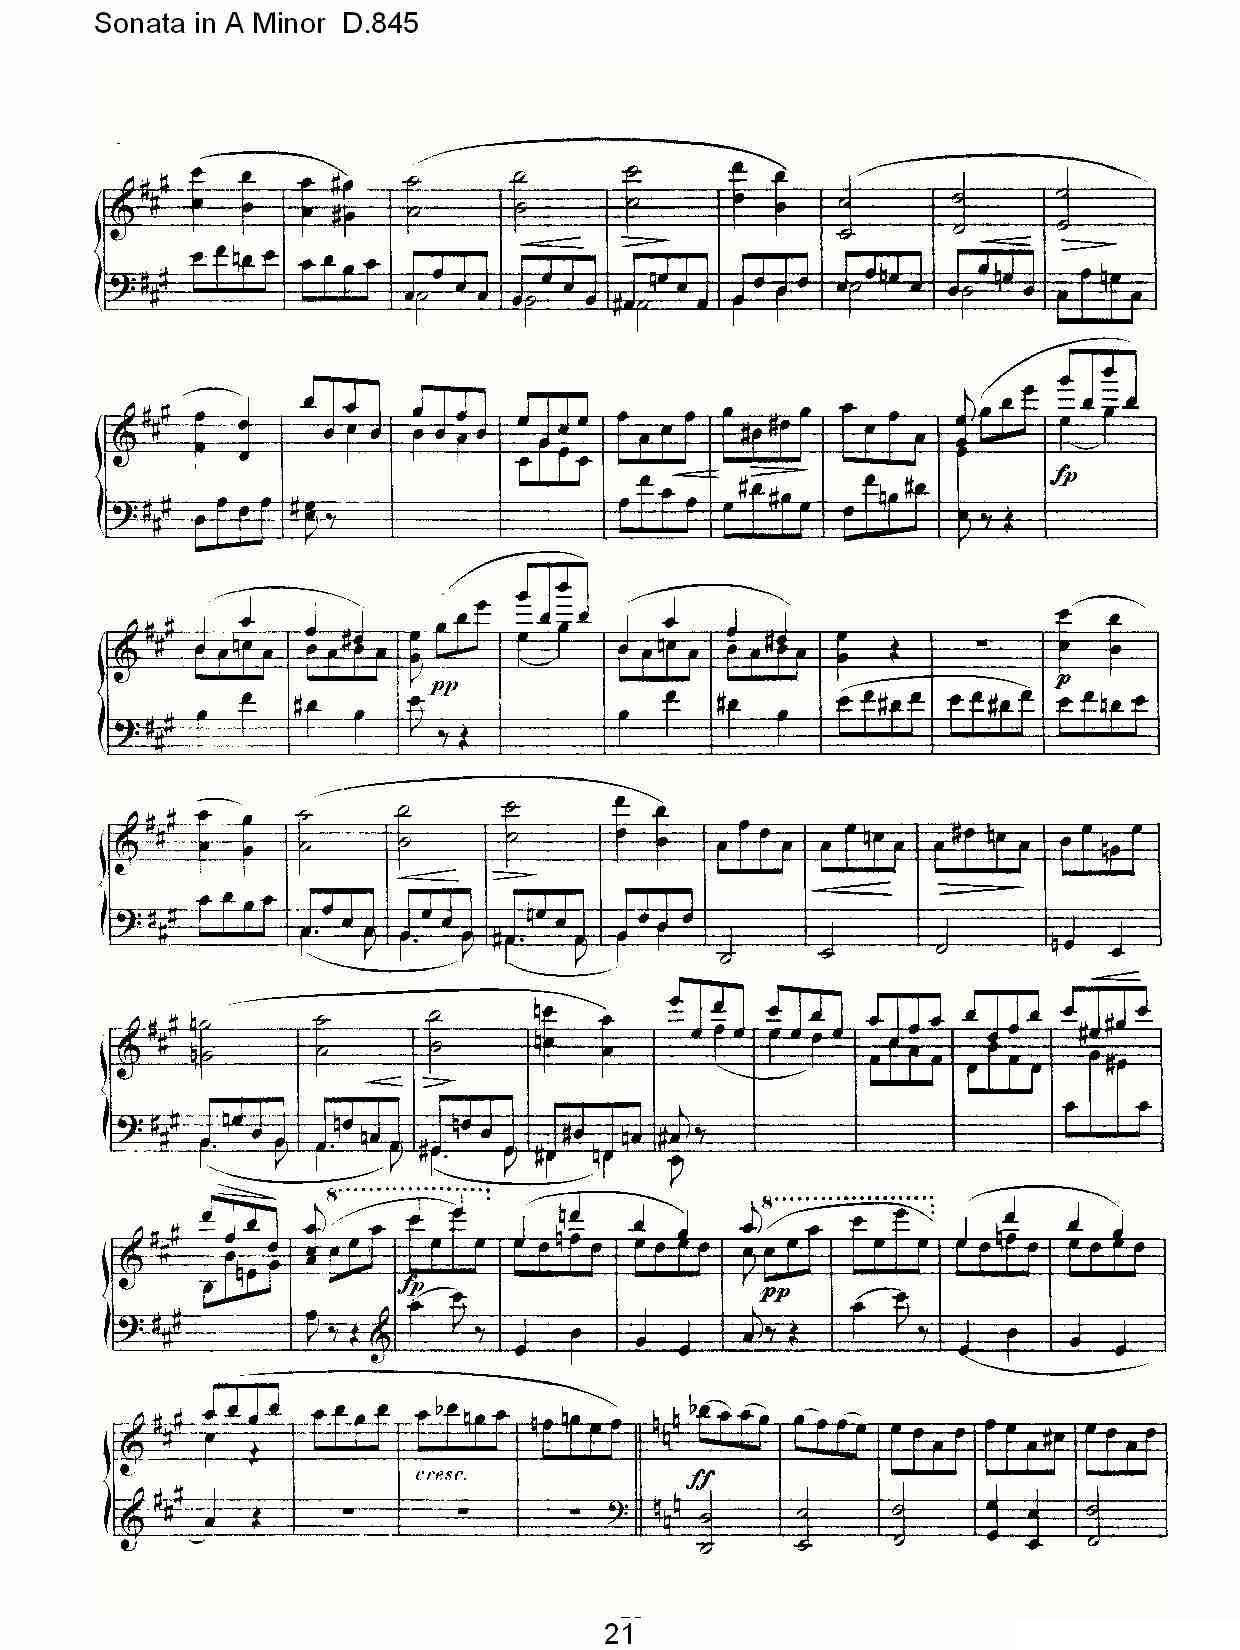 Sonata in A Minor D.845（A小调奏鸣曲 D.845）钢琴曲谱（图21）